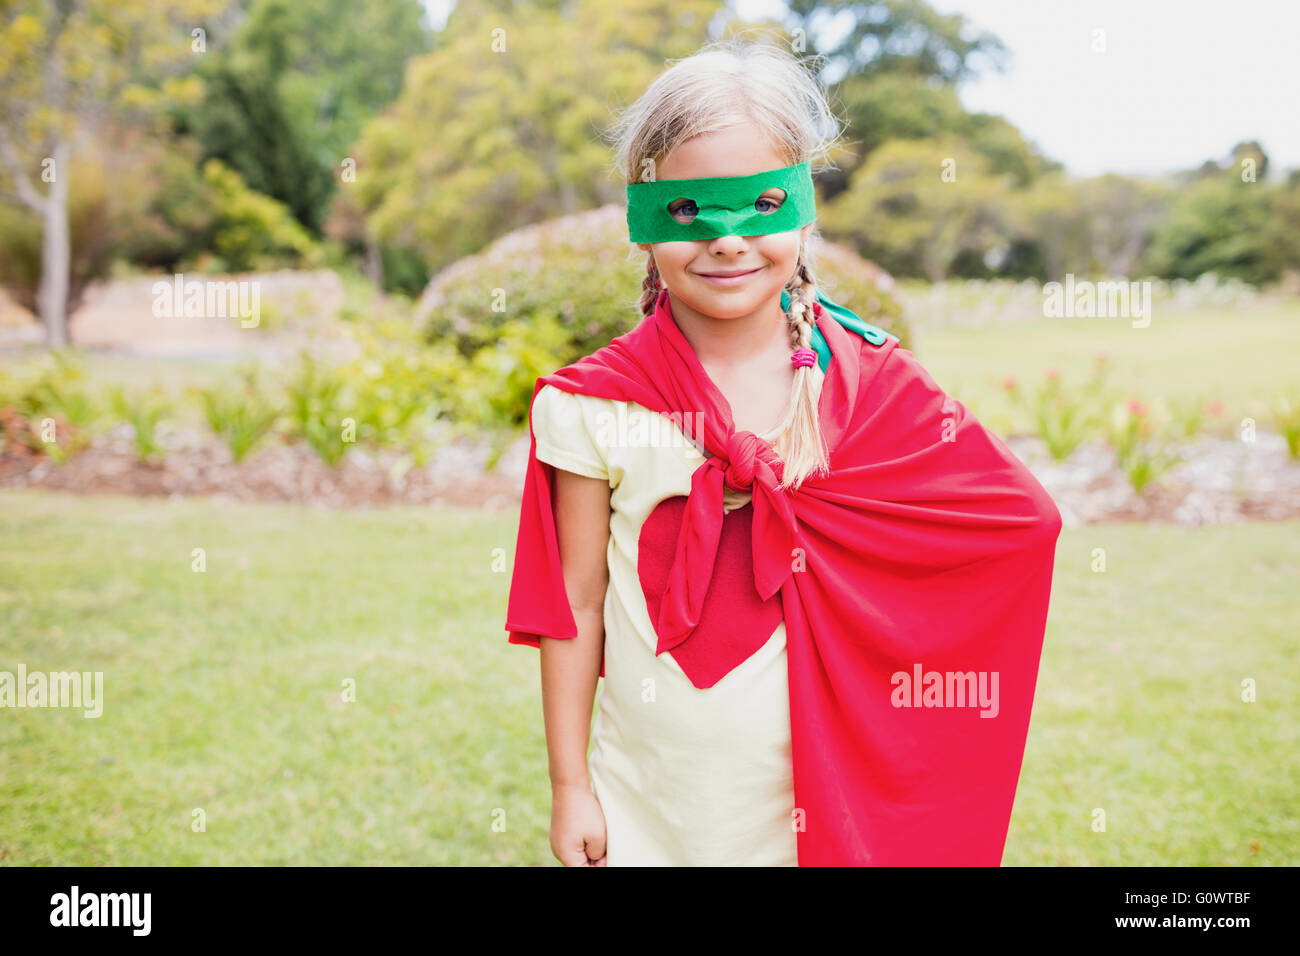 Little girl wearing superhero costume Banque D'Images